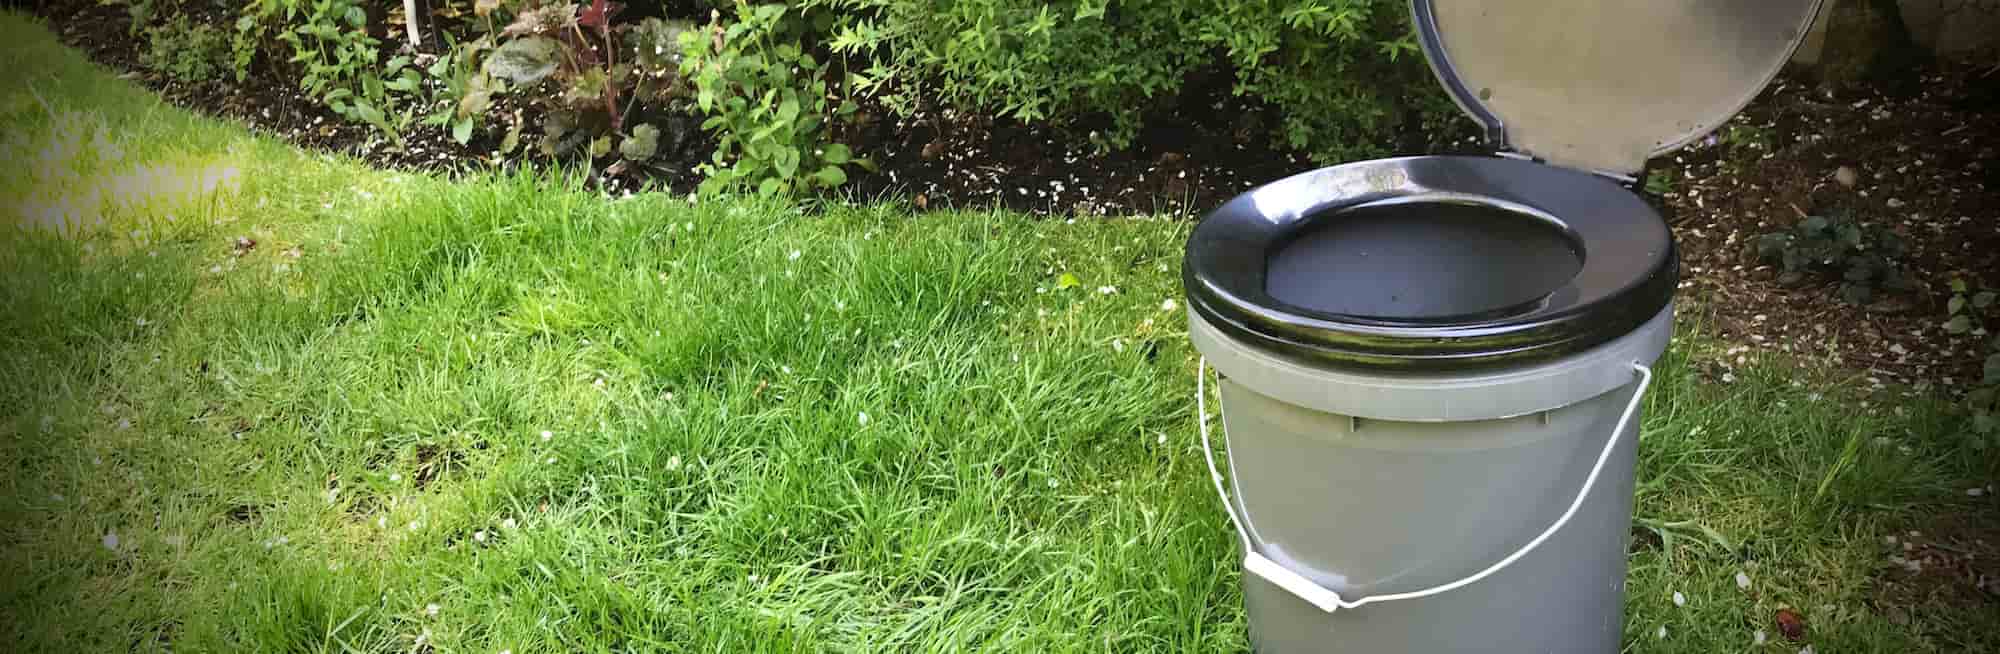 Simple bucket compost toilet